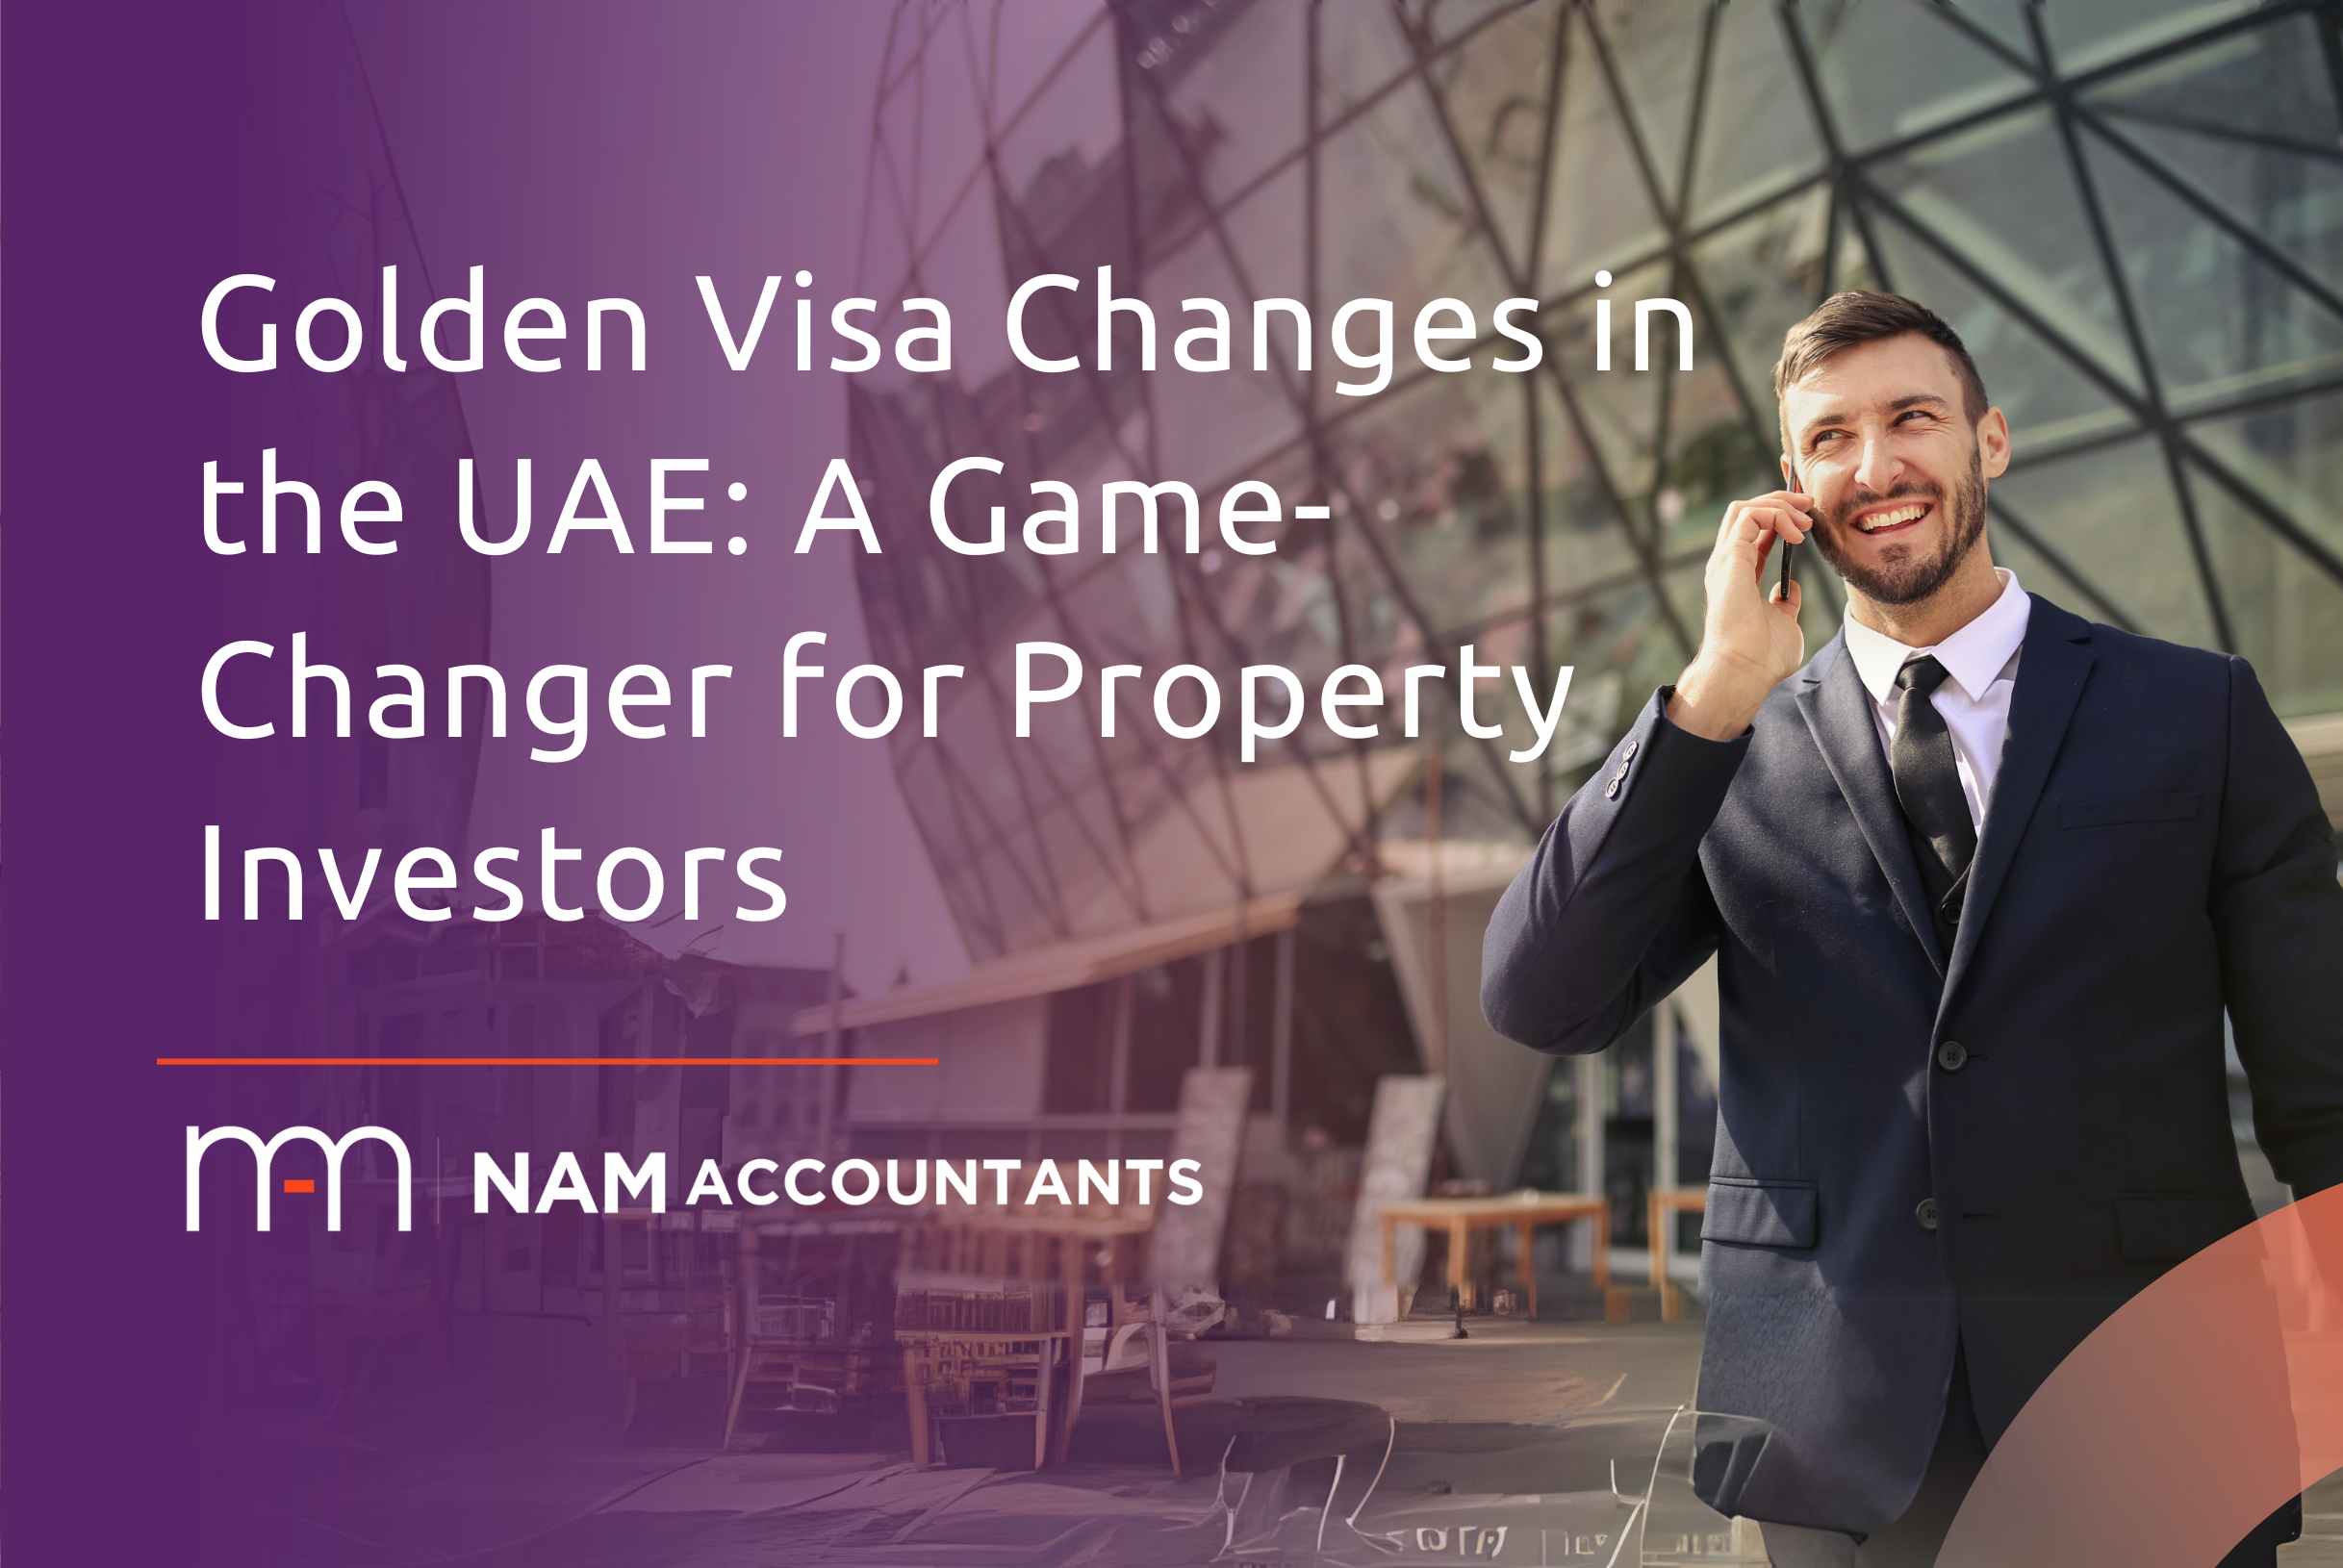 Golden Visa Changes in the UAE: A Game-Changer for Property Investors